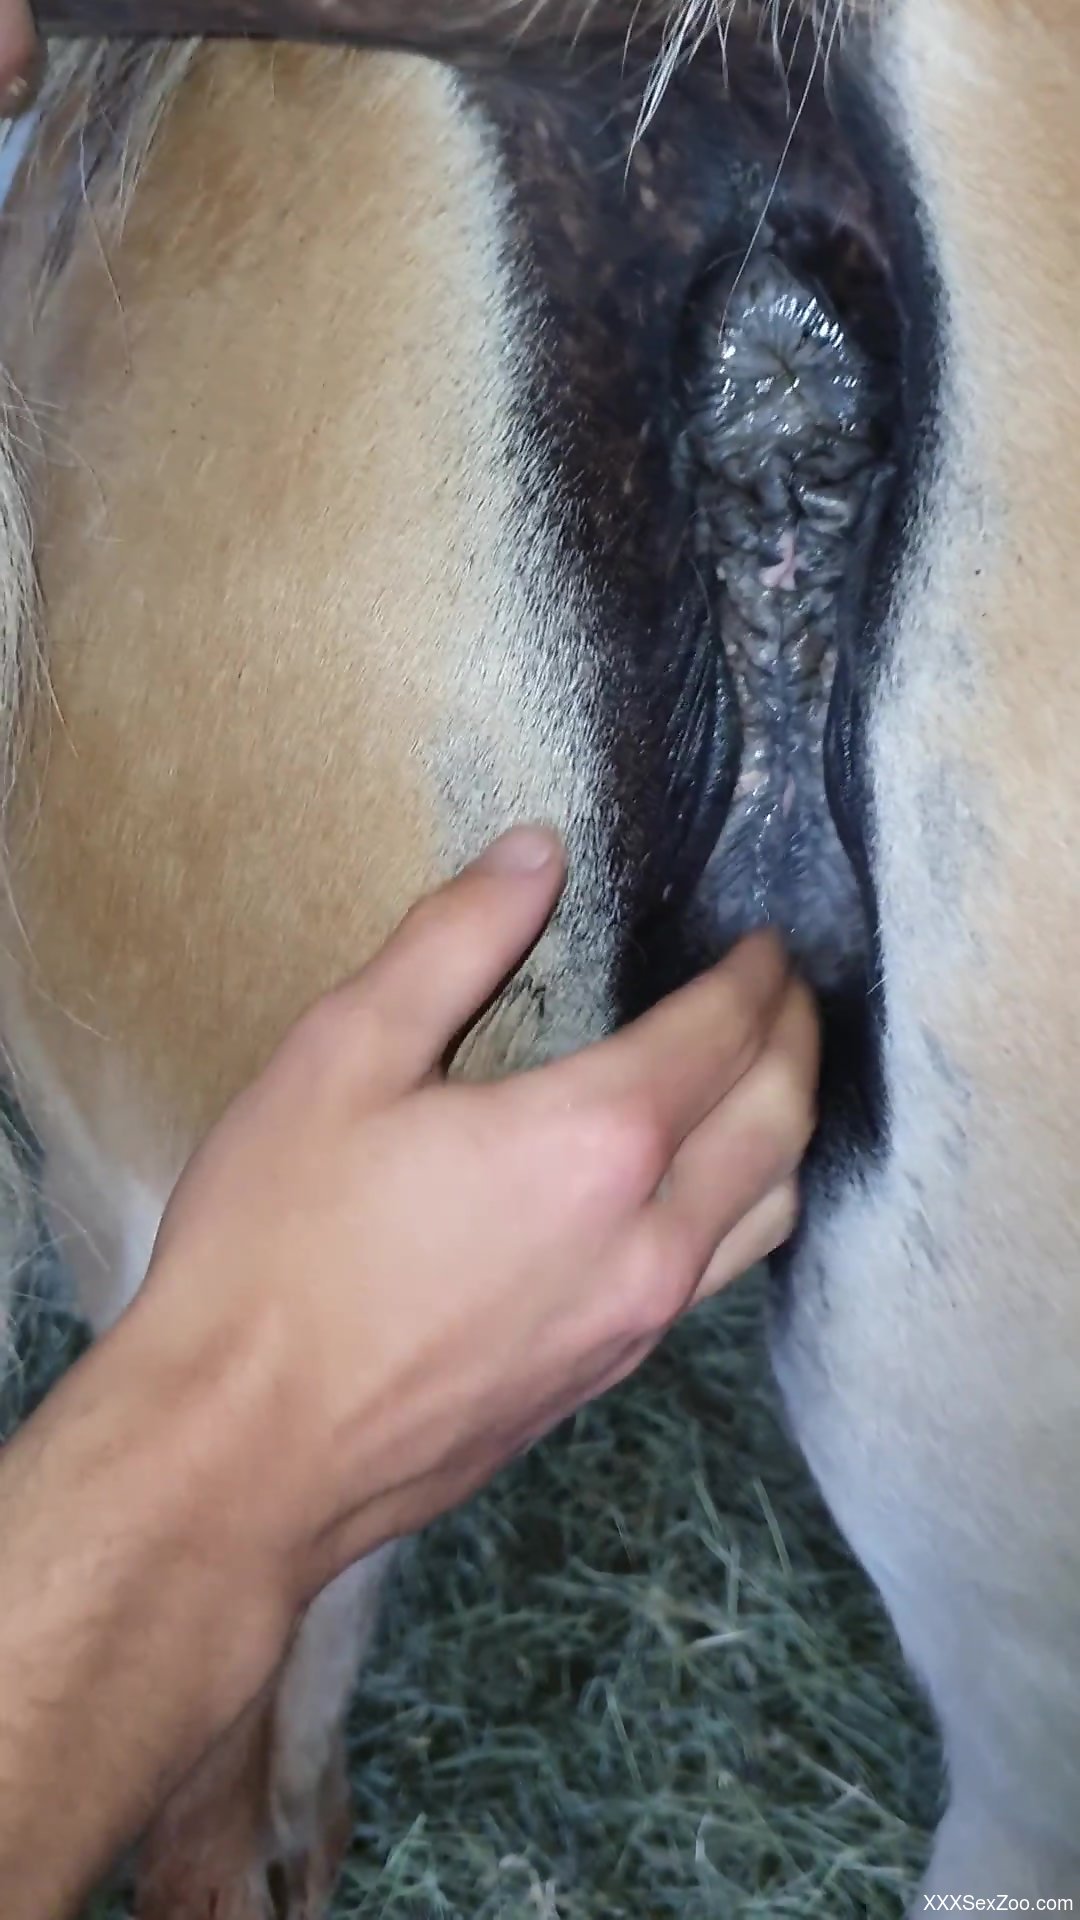 1080px x 1920px - Horny guy finger fucks his female horse in harsh modes - XXXSexZoo.com